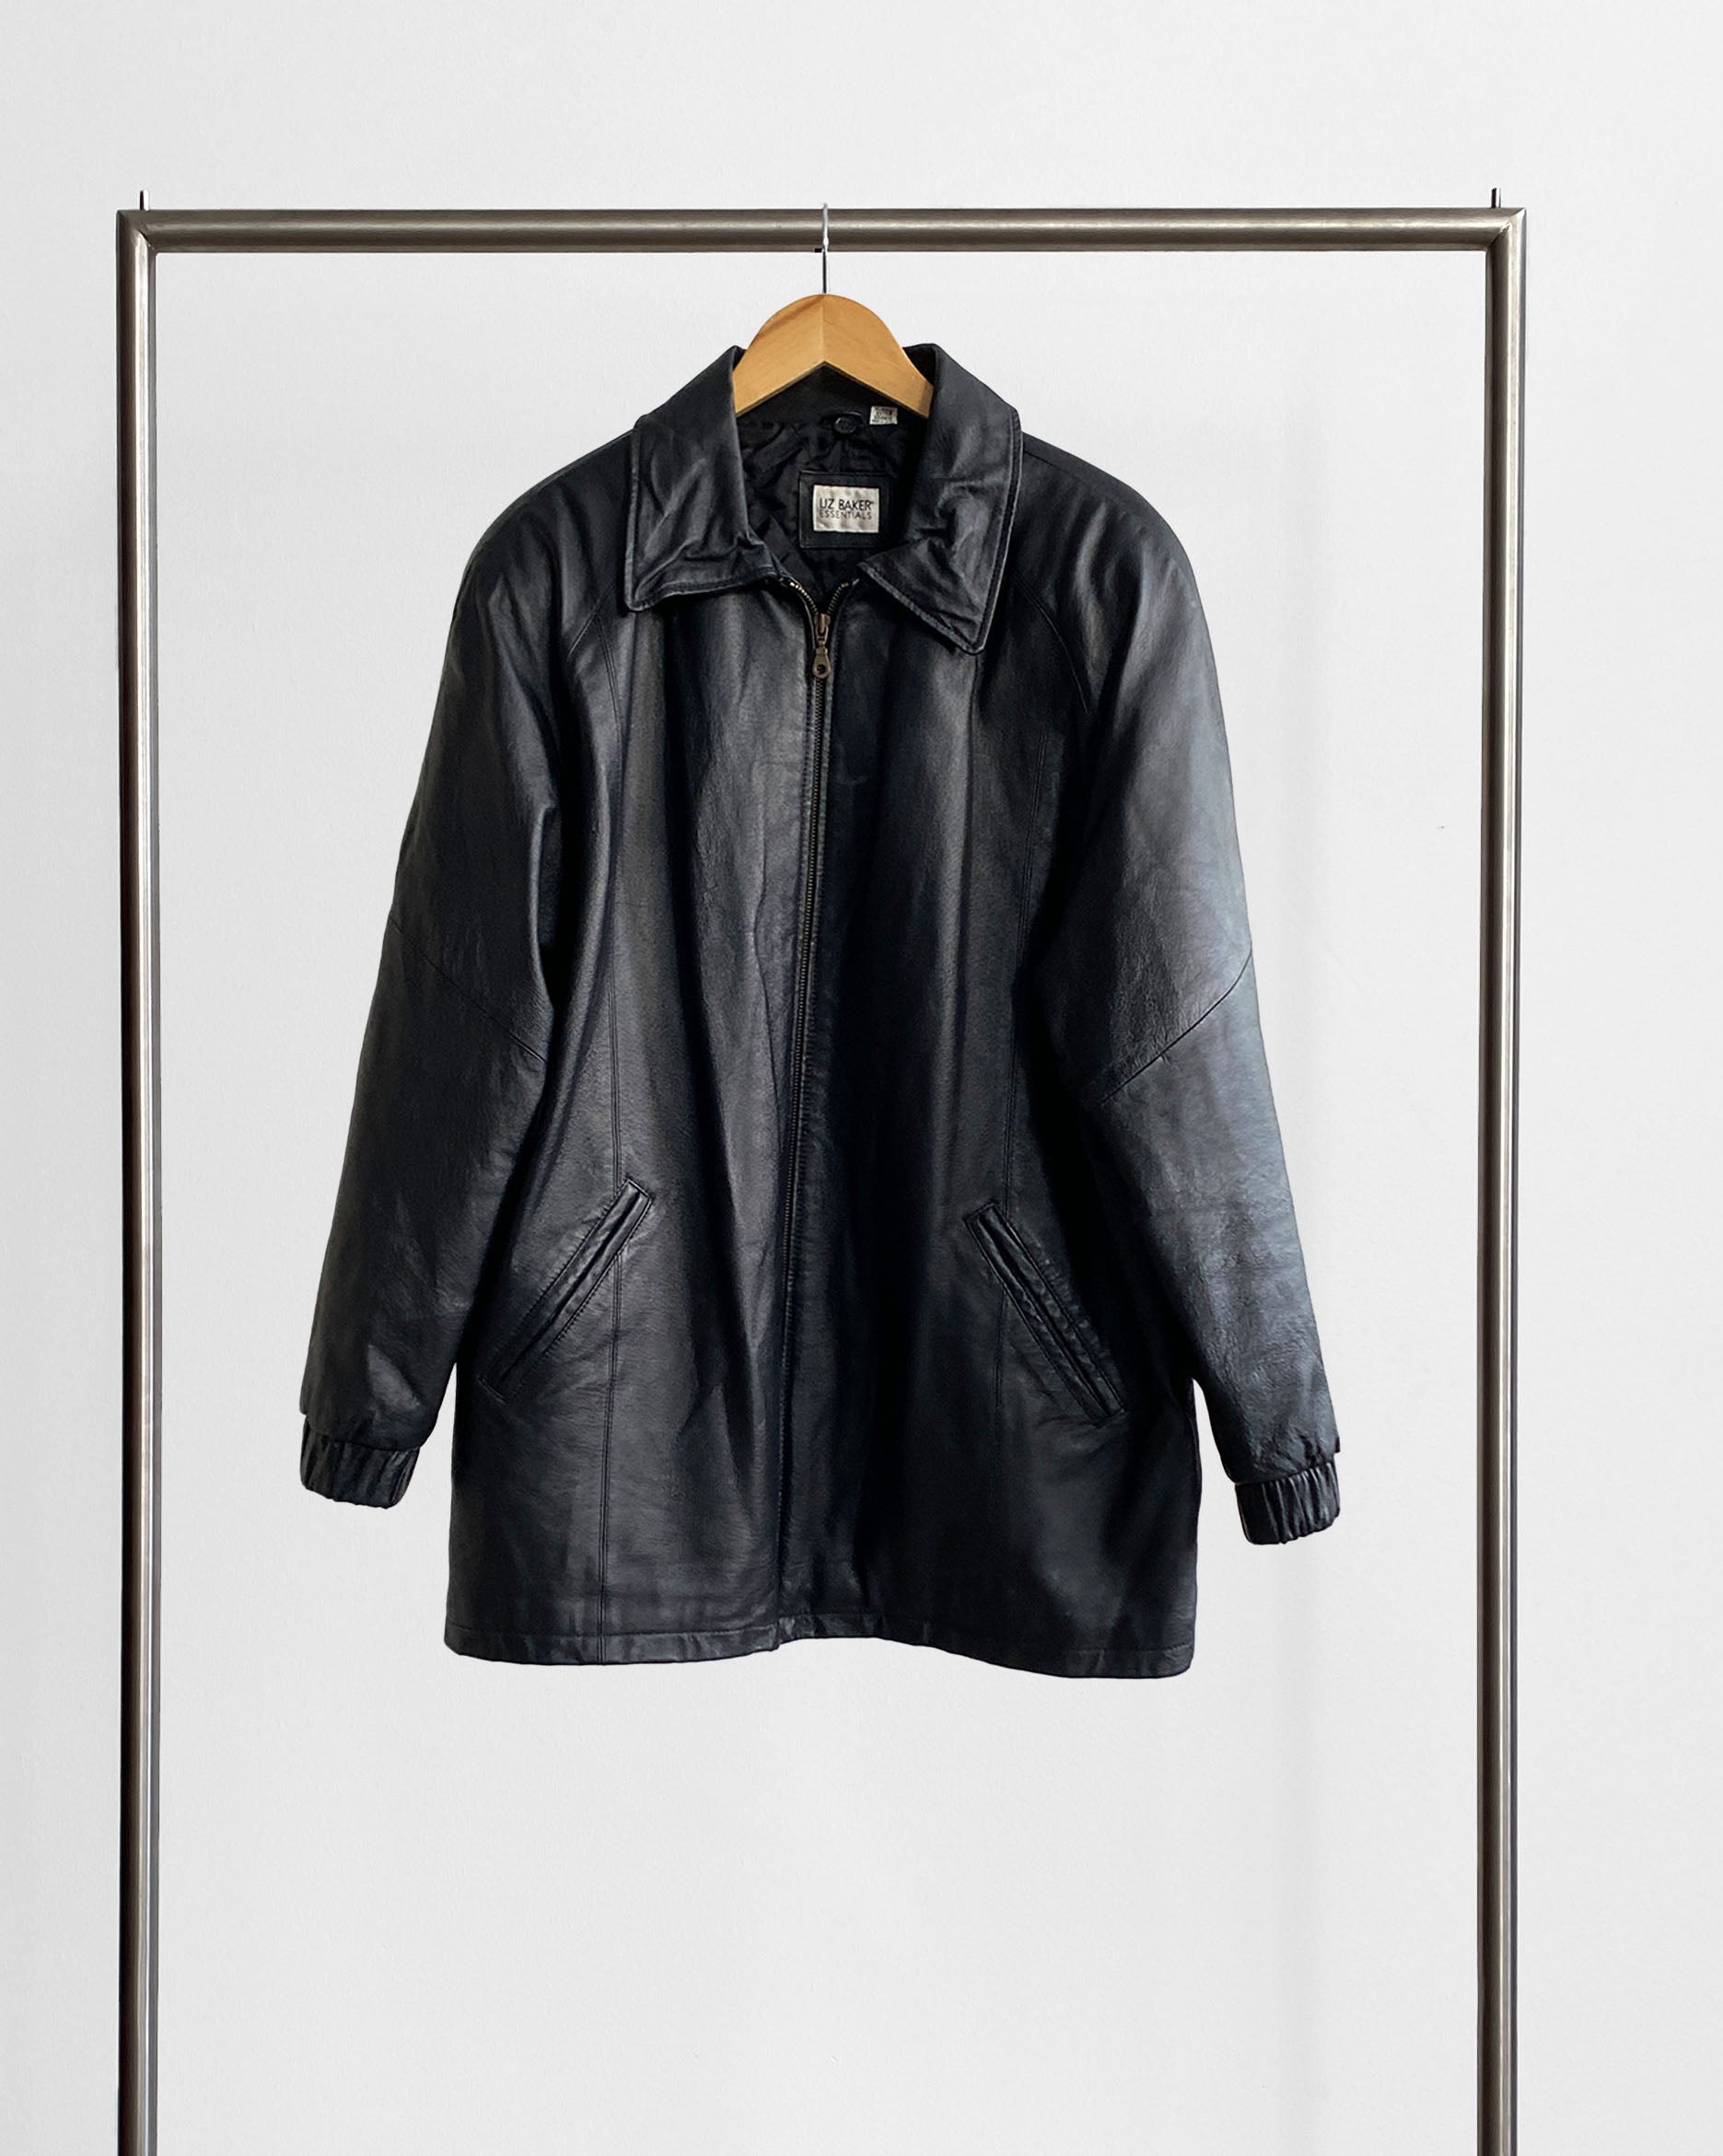 Black Zip Up Leather Jacket